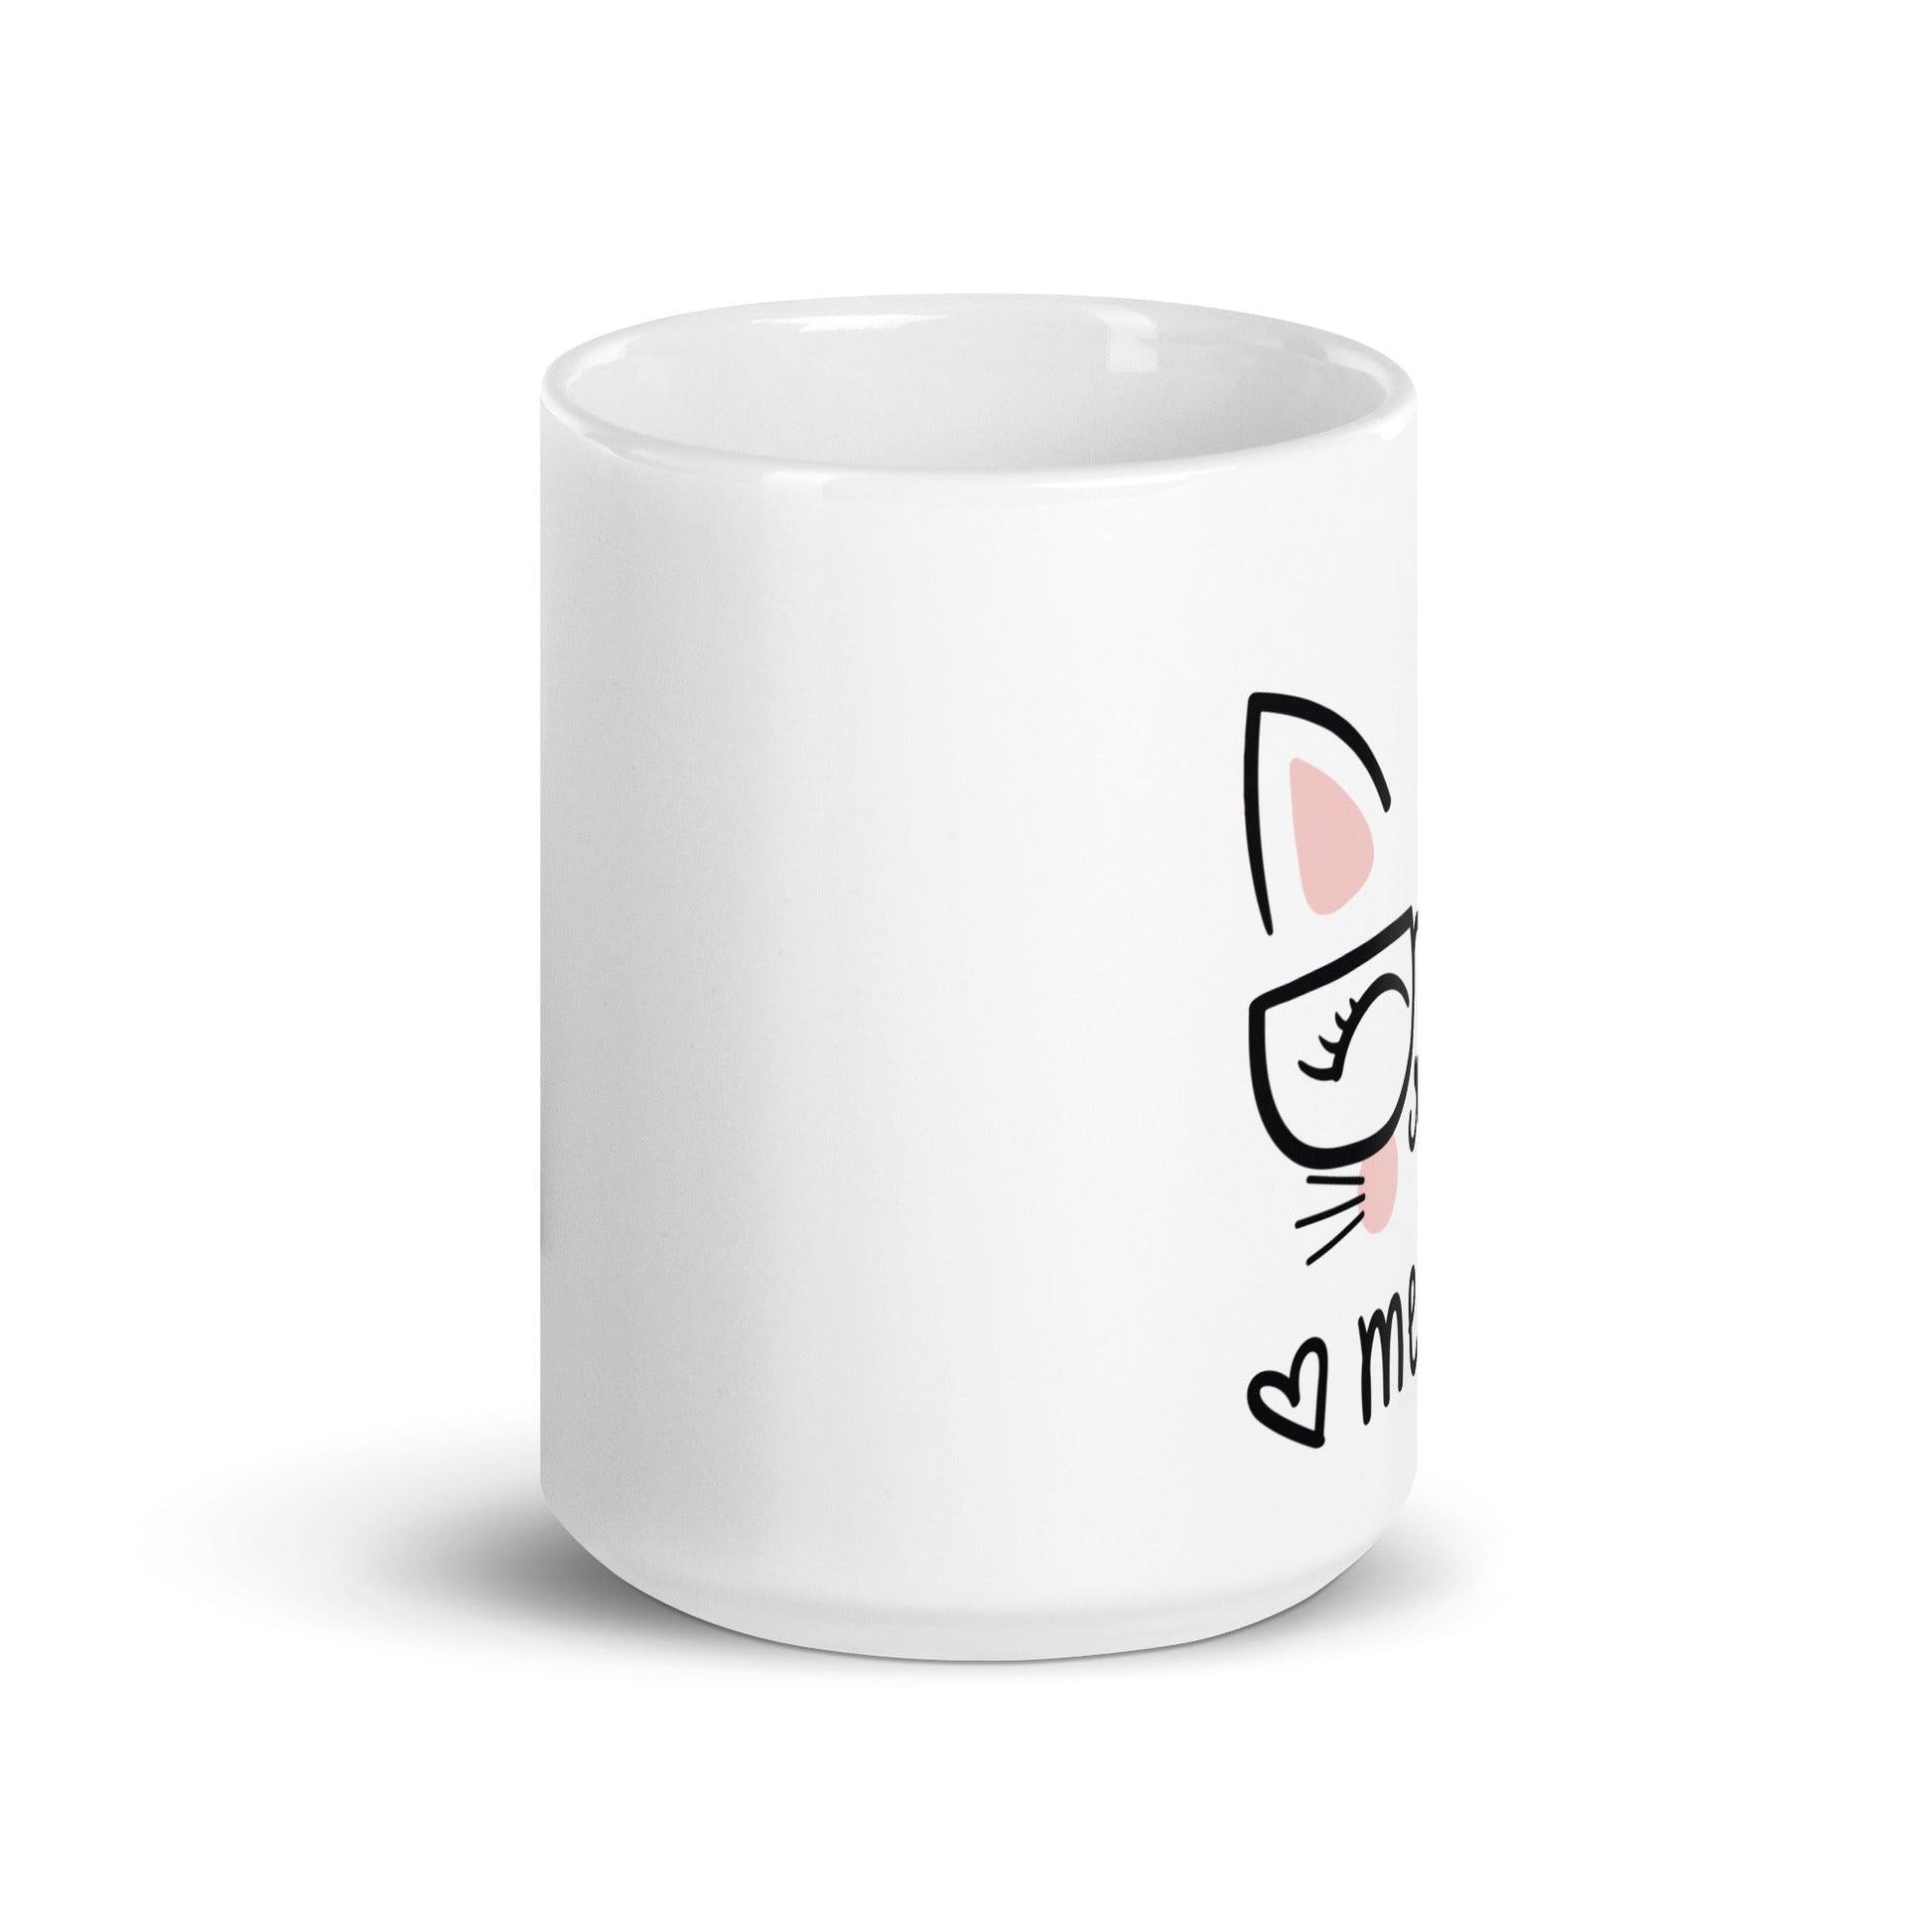 Meow The Cat Glossy Mug - L & M Kee, LLC